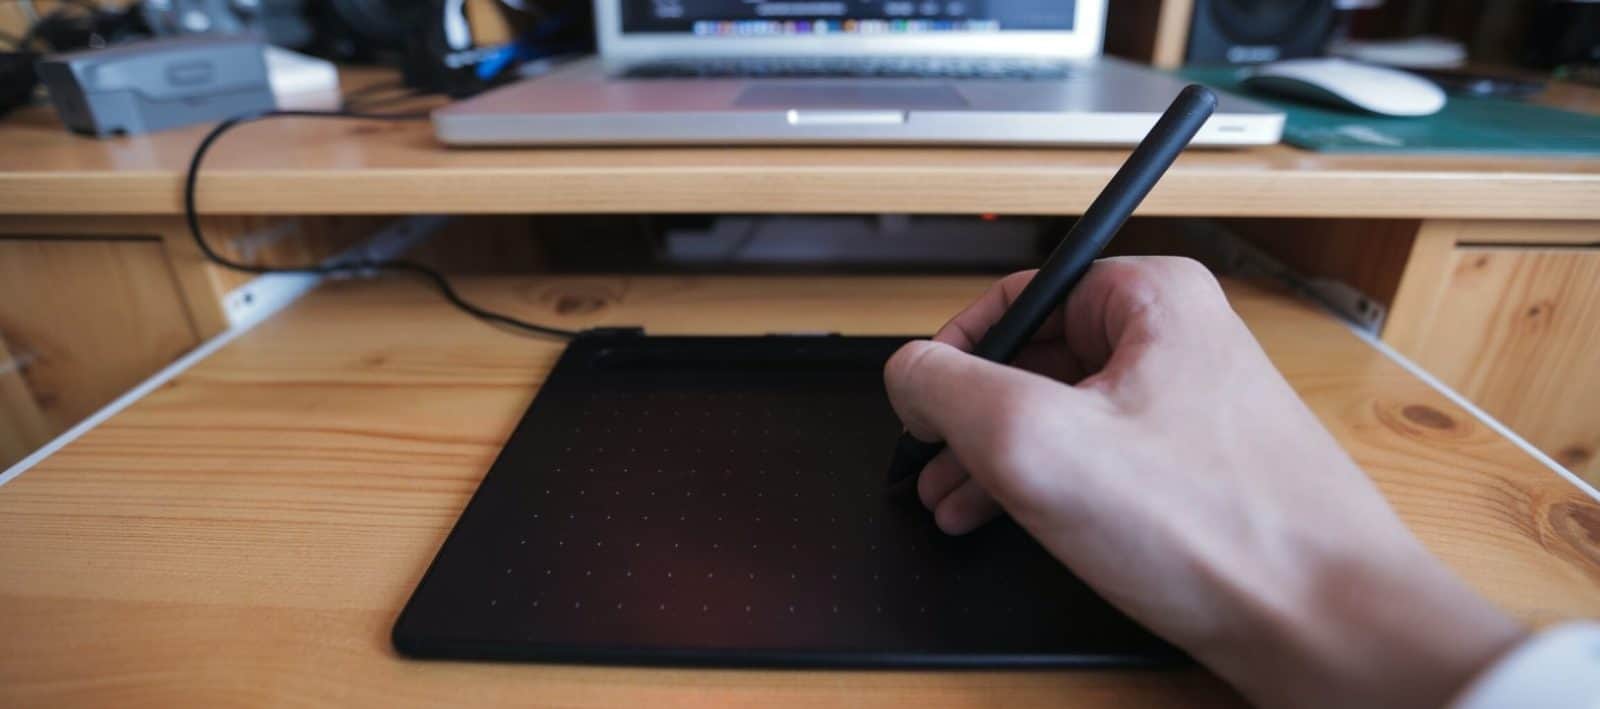 hand using a graphic design pen macbook background